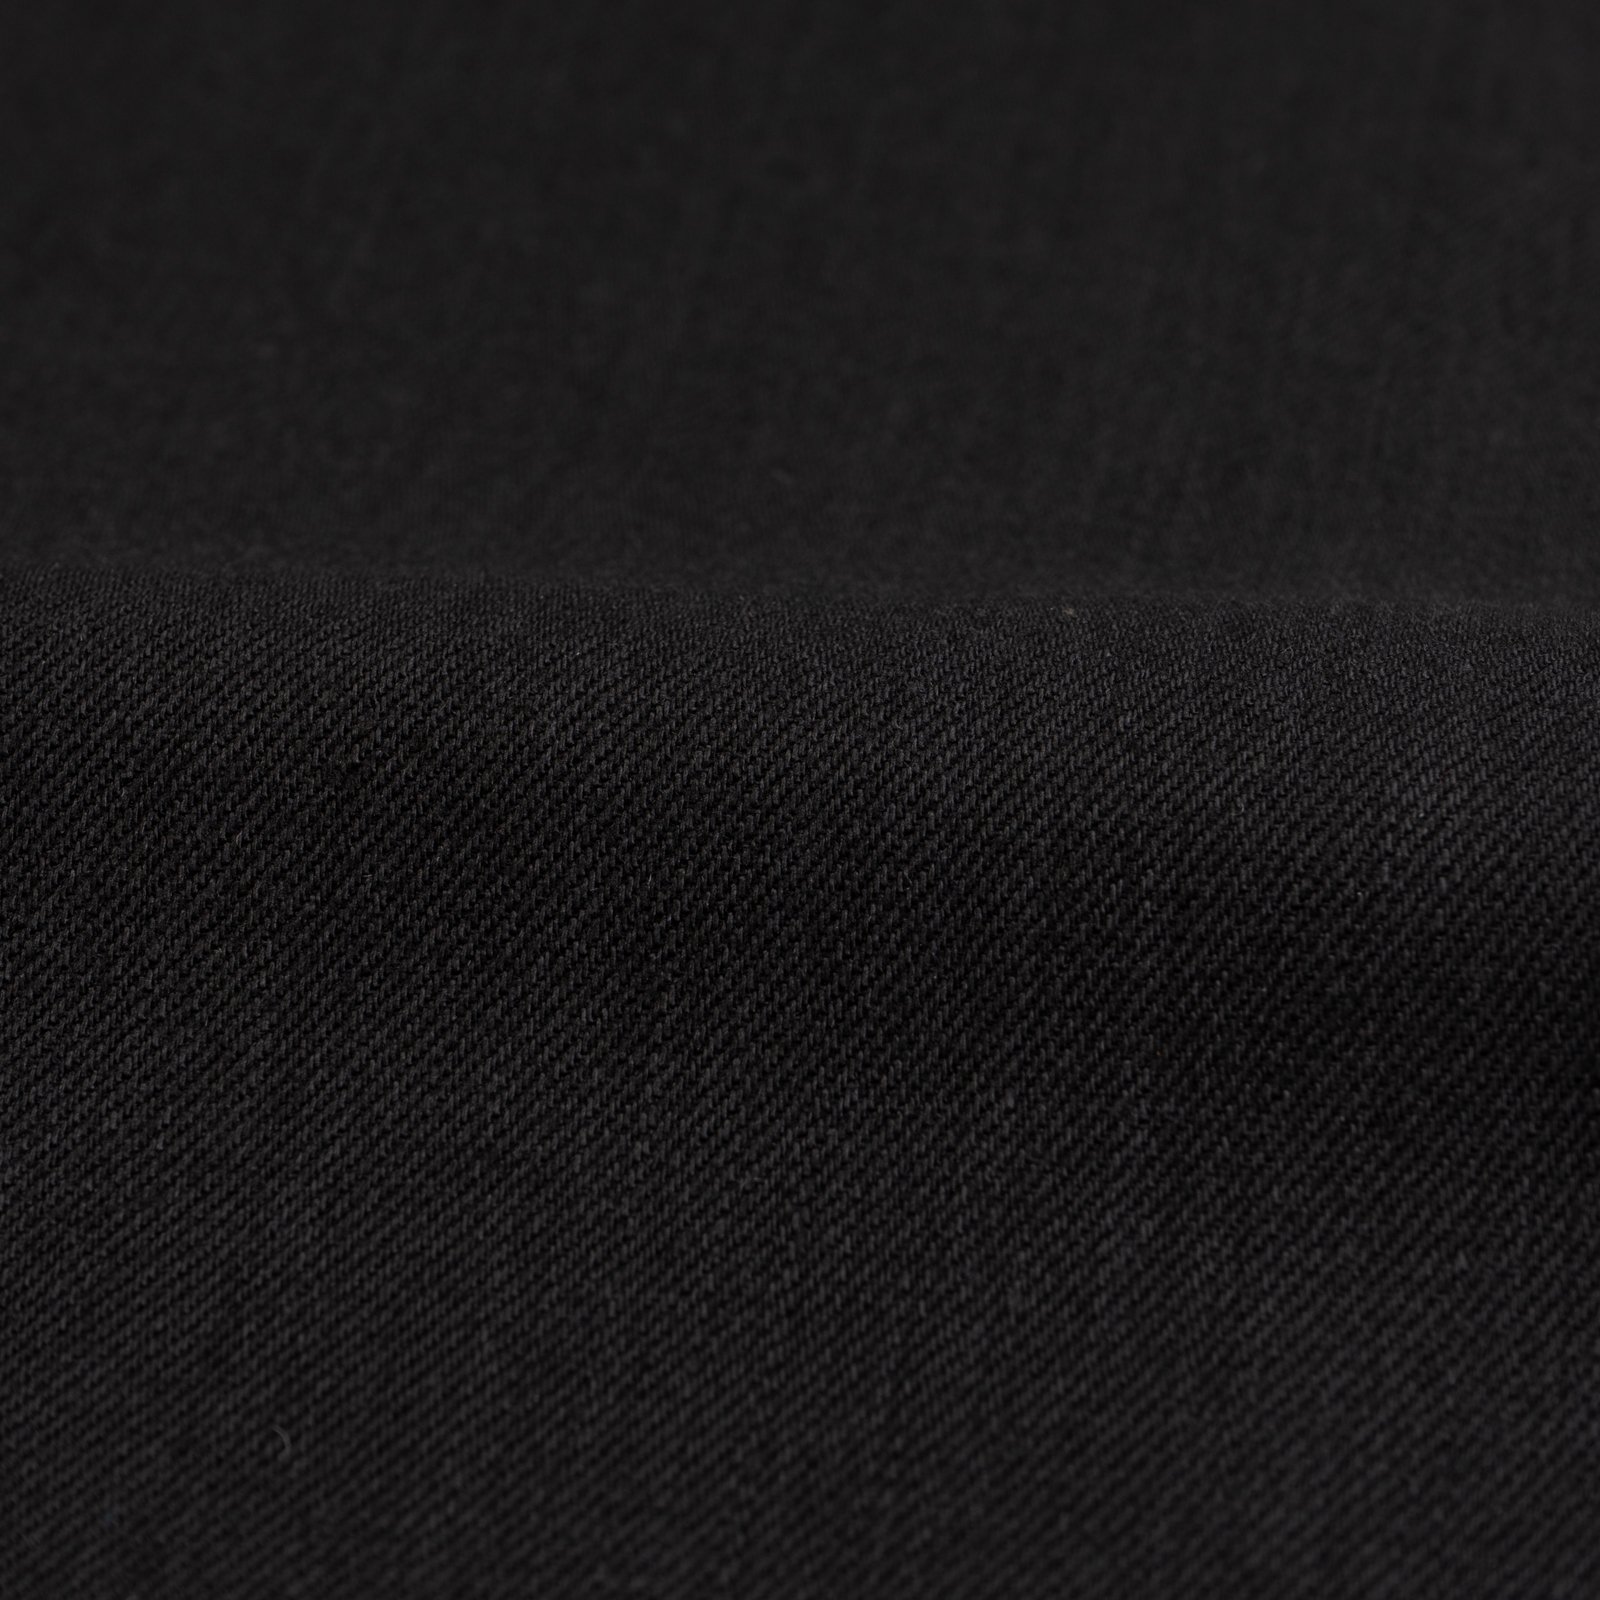  Deadstock Double Black Selvedge Jeans - fabric 